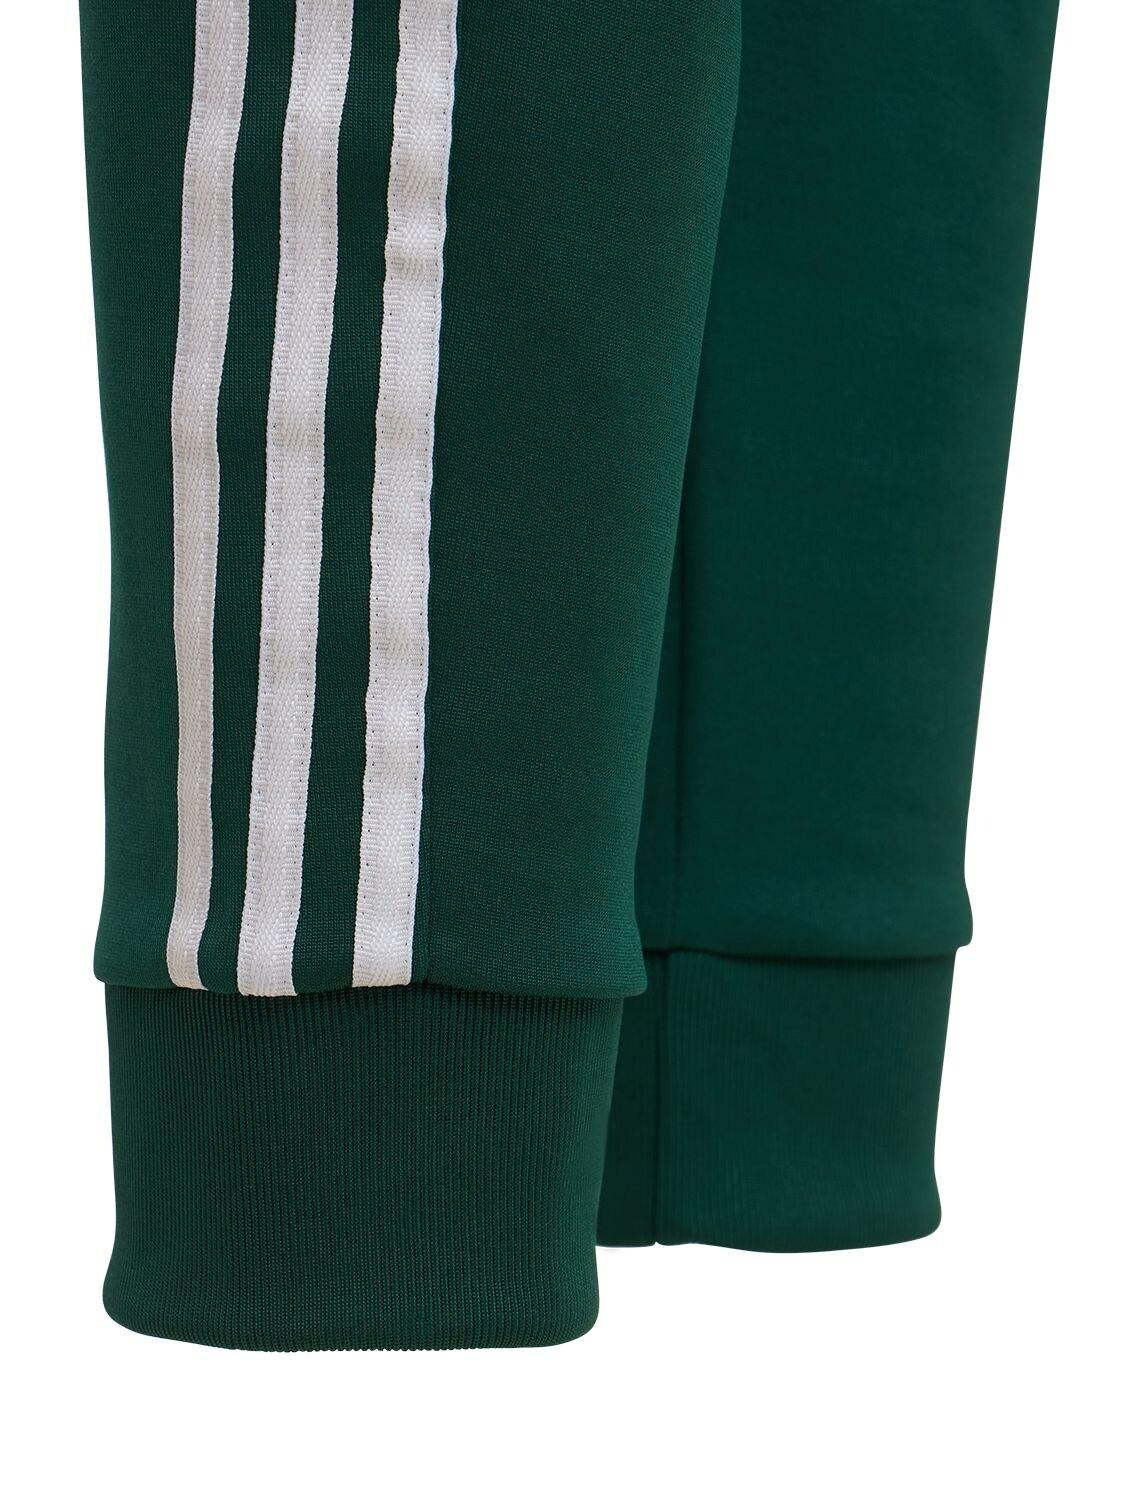 adidas Originals Sst Primeblue Track Pants in Green for Men